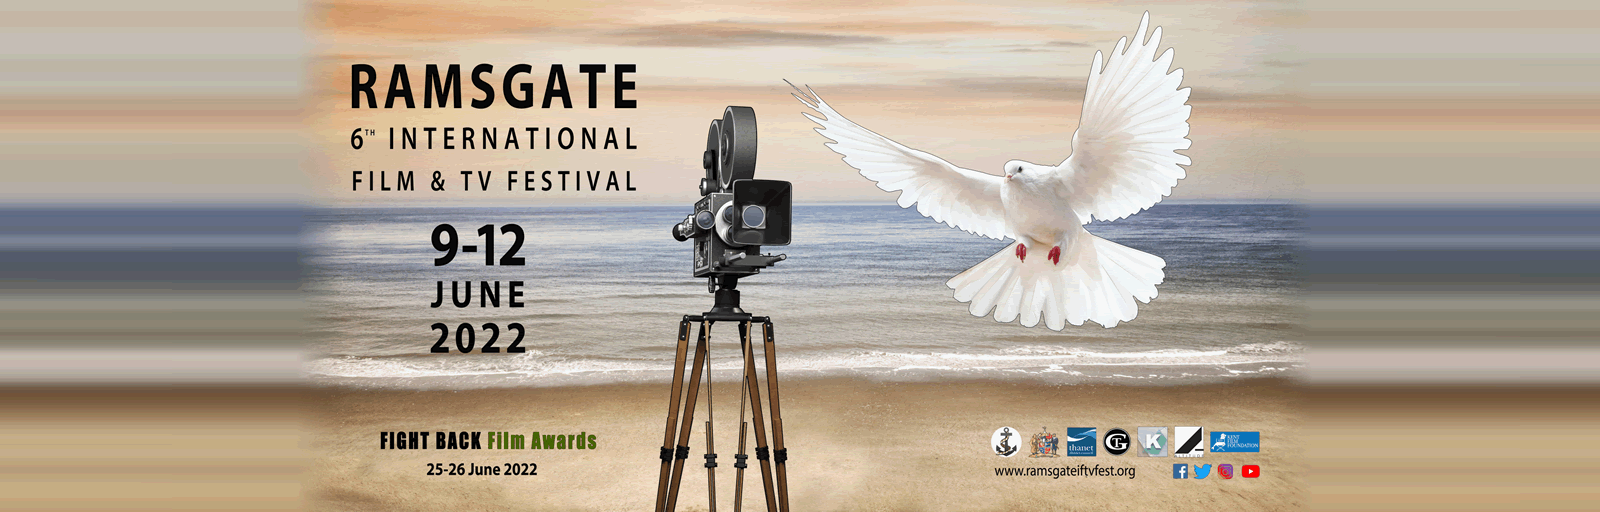 Ramsgate International Film and TV festival